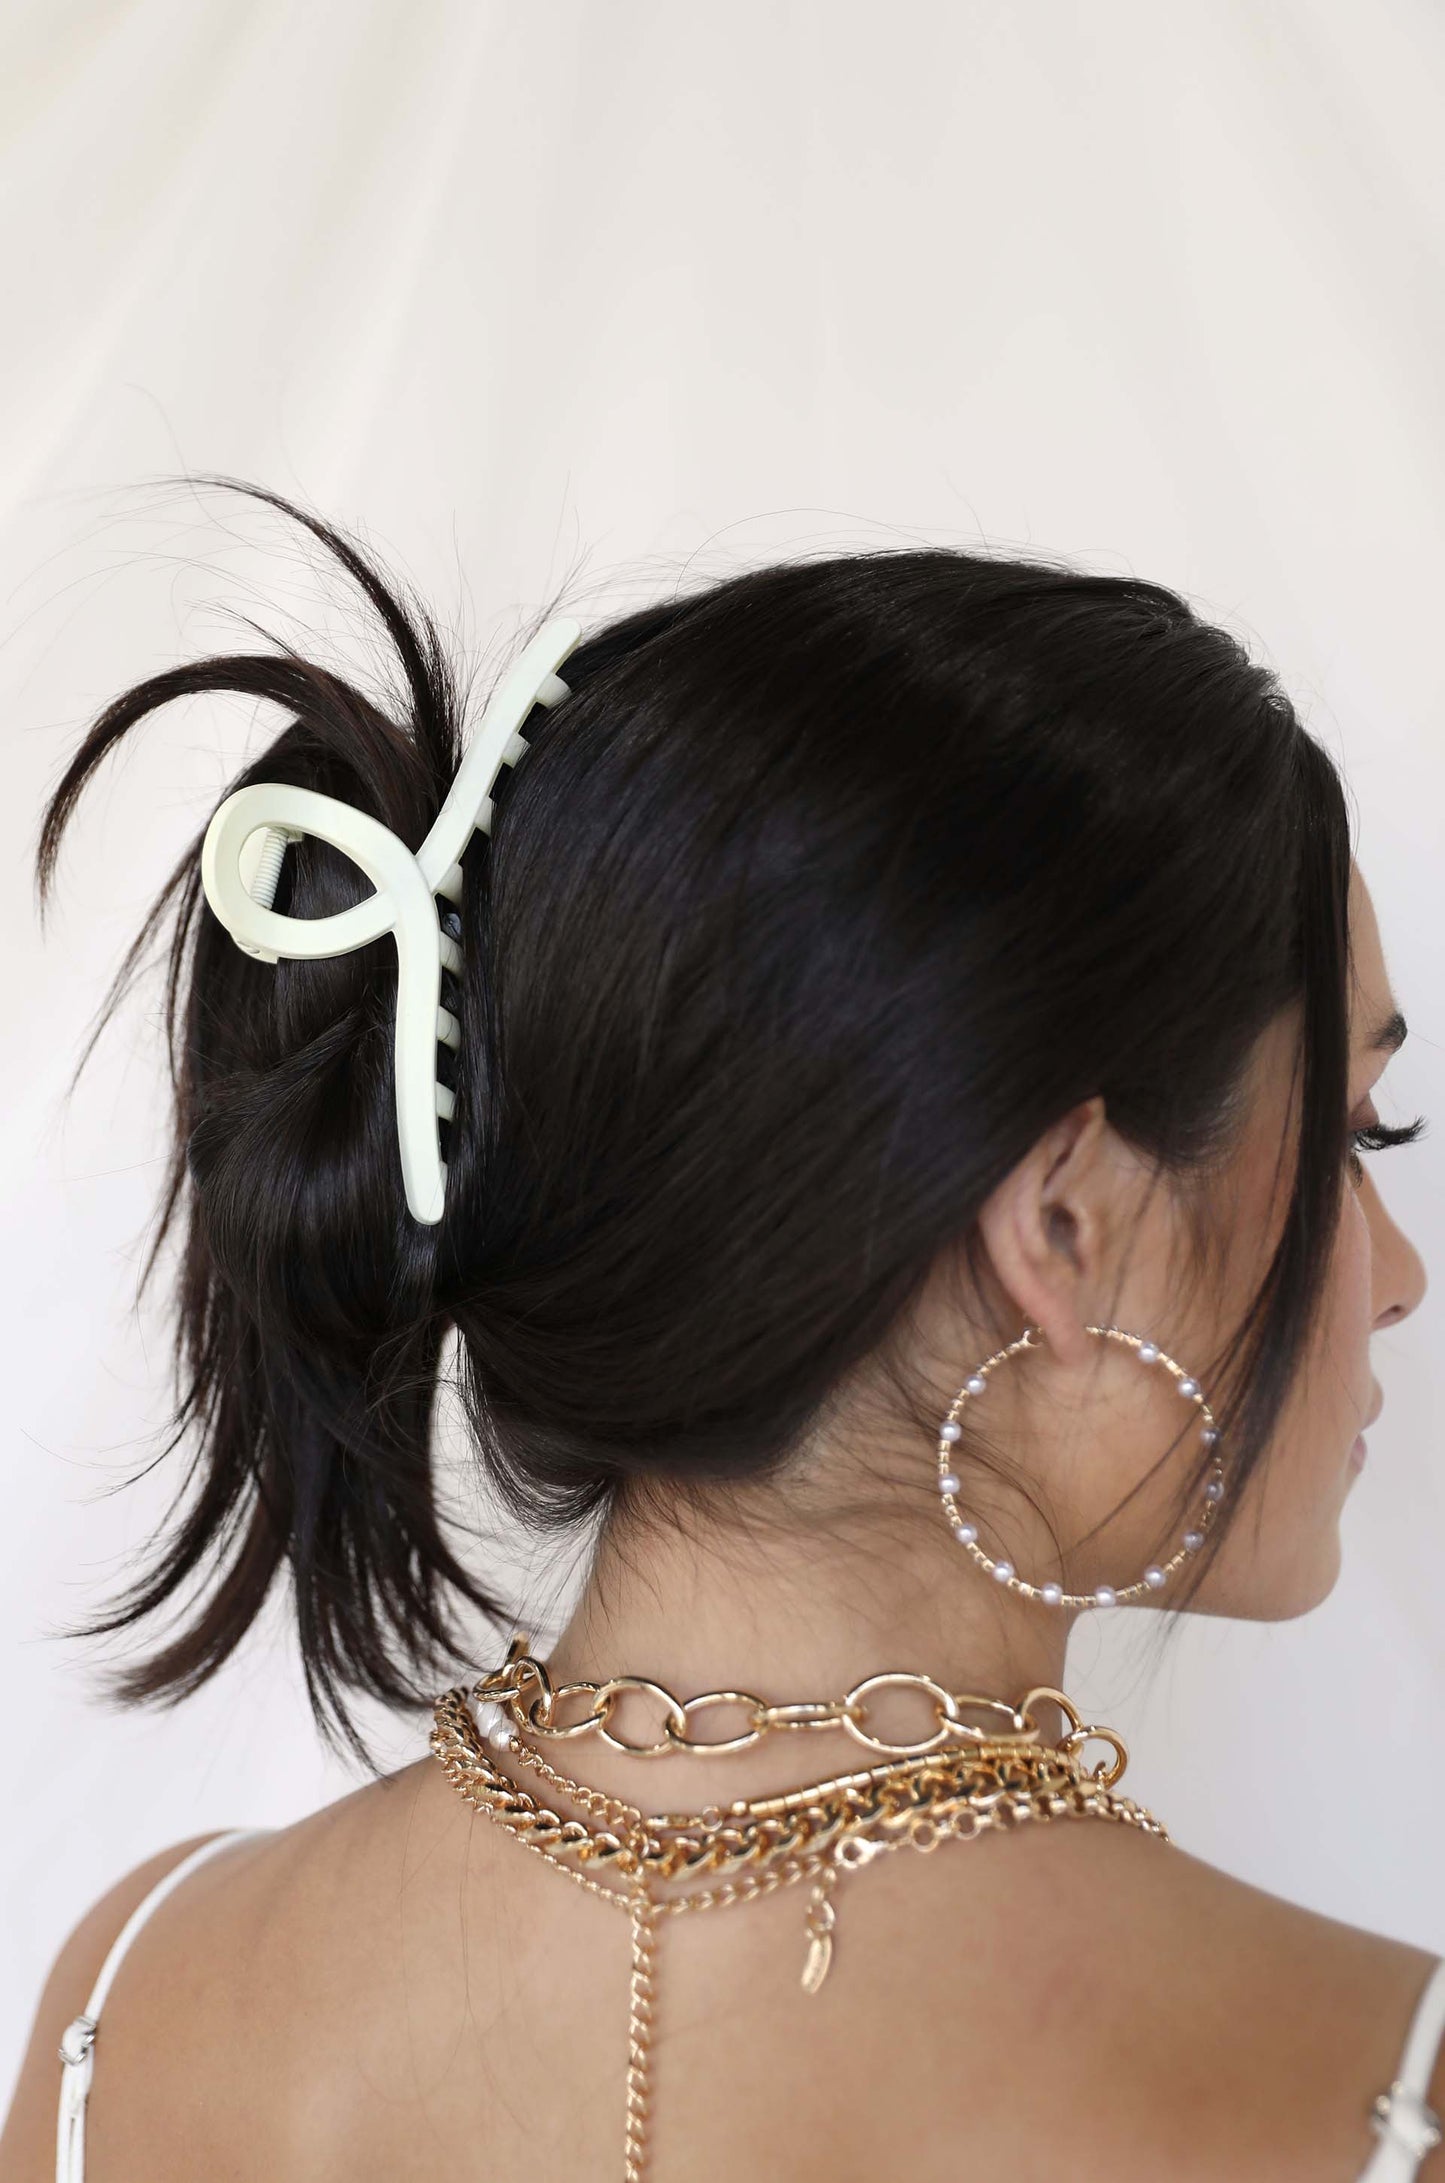 A Mermaid's Pearl and Crystal Dotted Hoop Earrings - Premium Earrings from Ettika - Just $55! Shop now at Tooksie